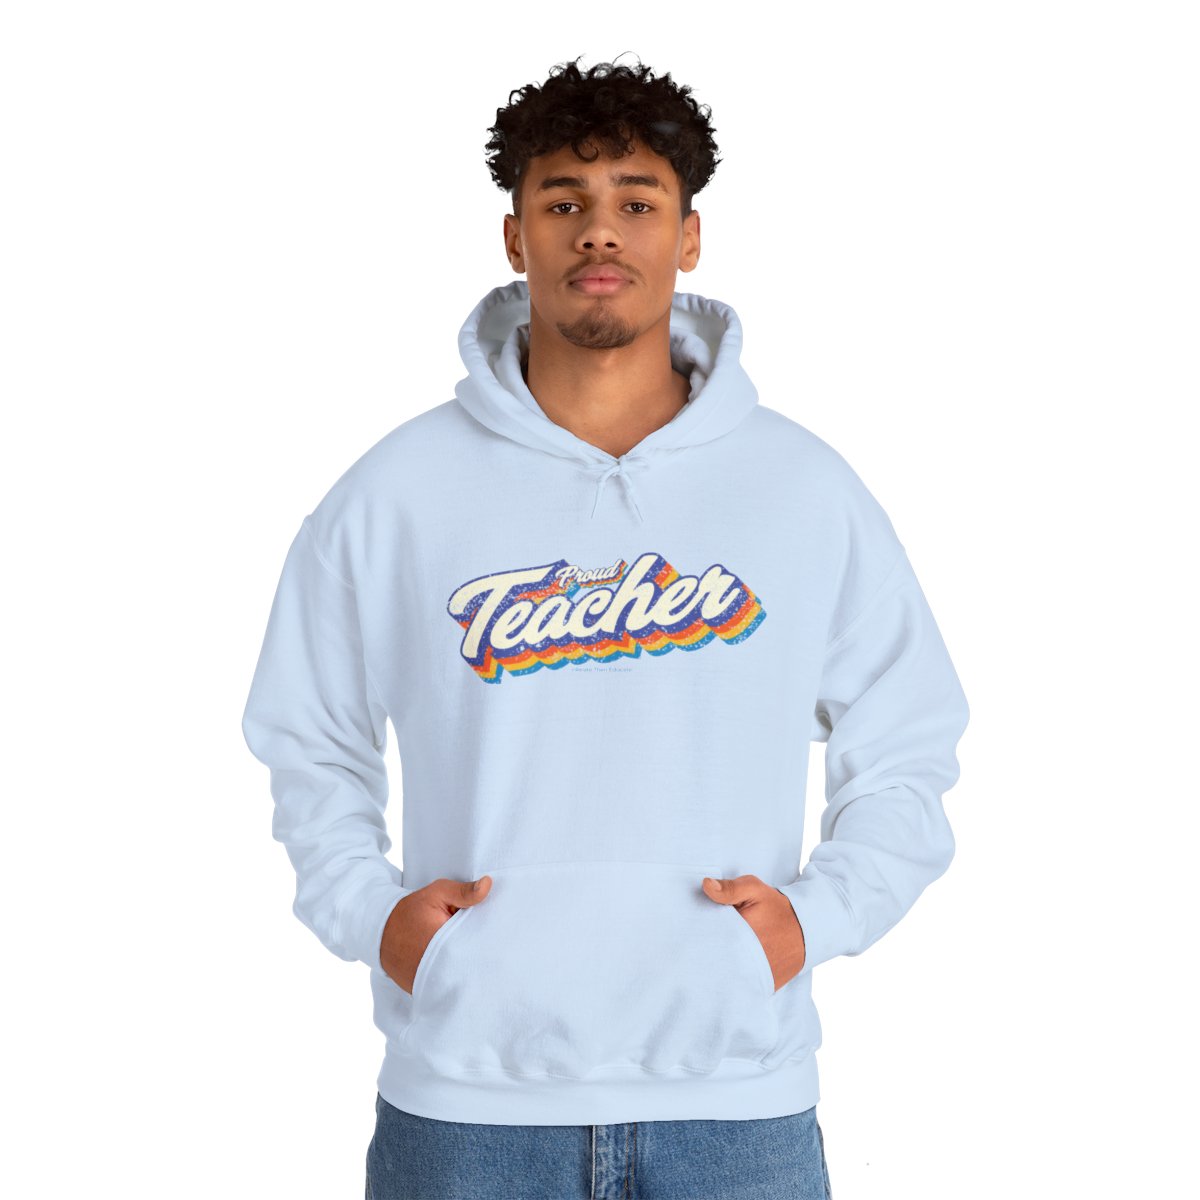 Proud Teacher - Unisex Heavy Blend Hooded Sweatshirt for Teachers product thumbnail image